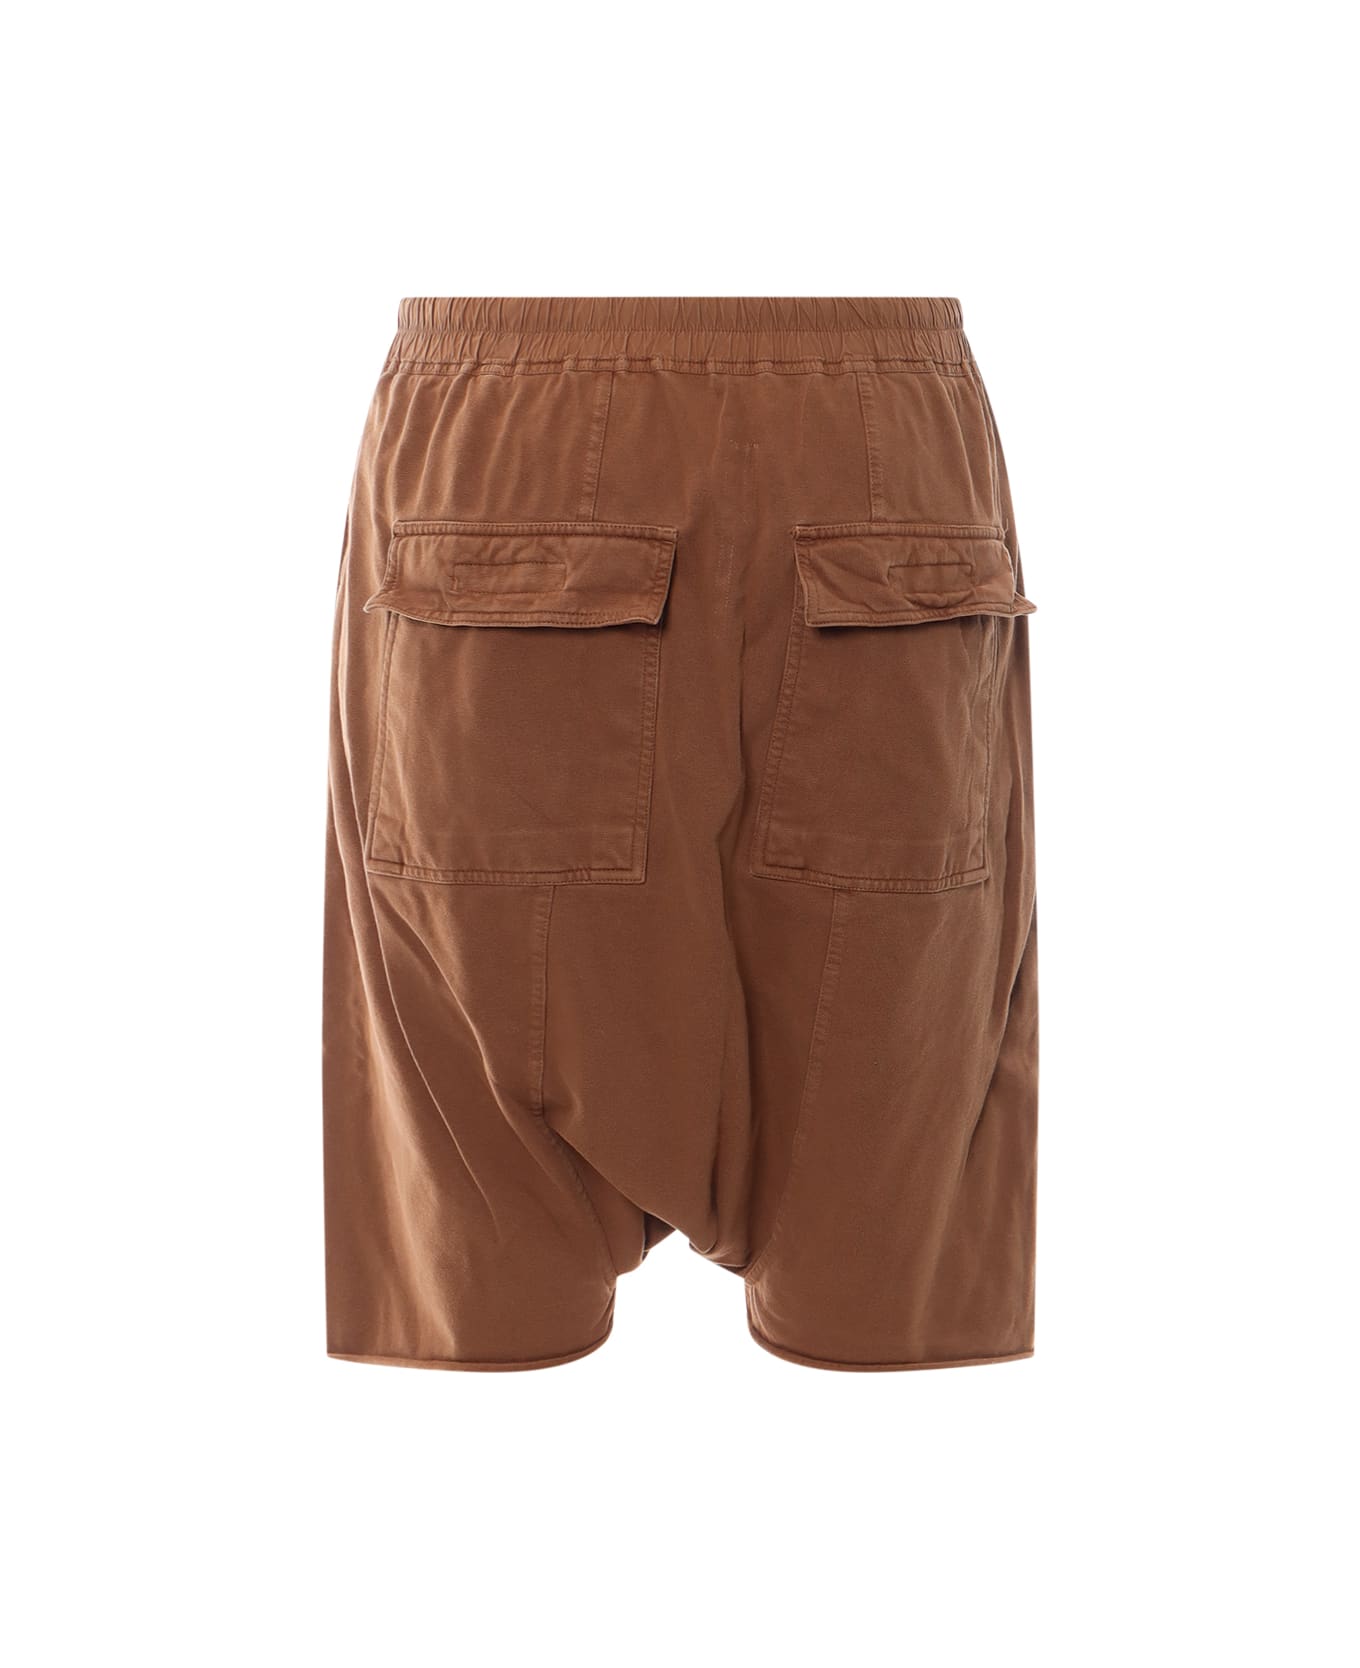 DRKSHDW Bermuda Shorts - Brown ショートパンツ